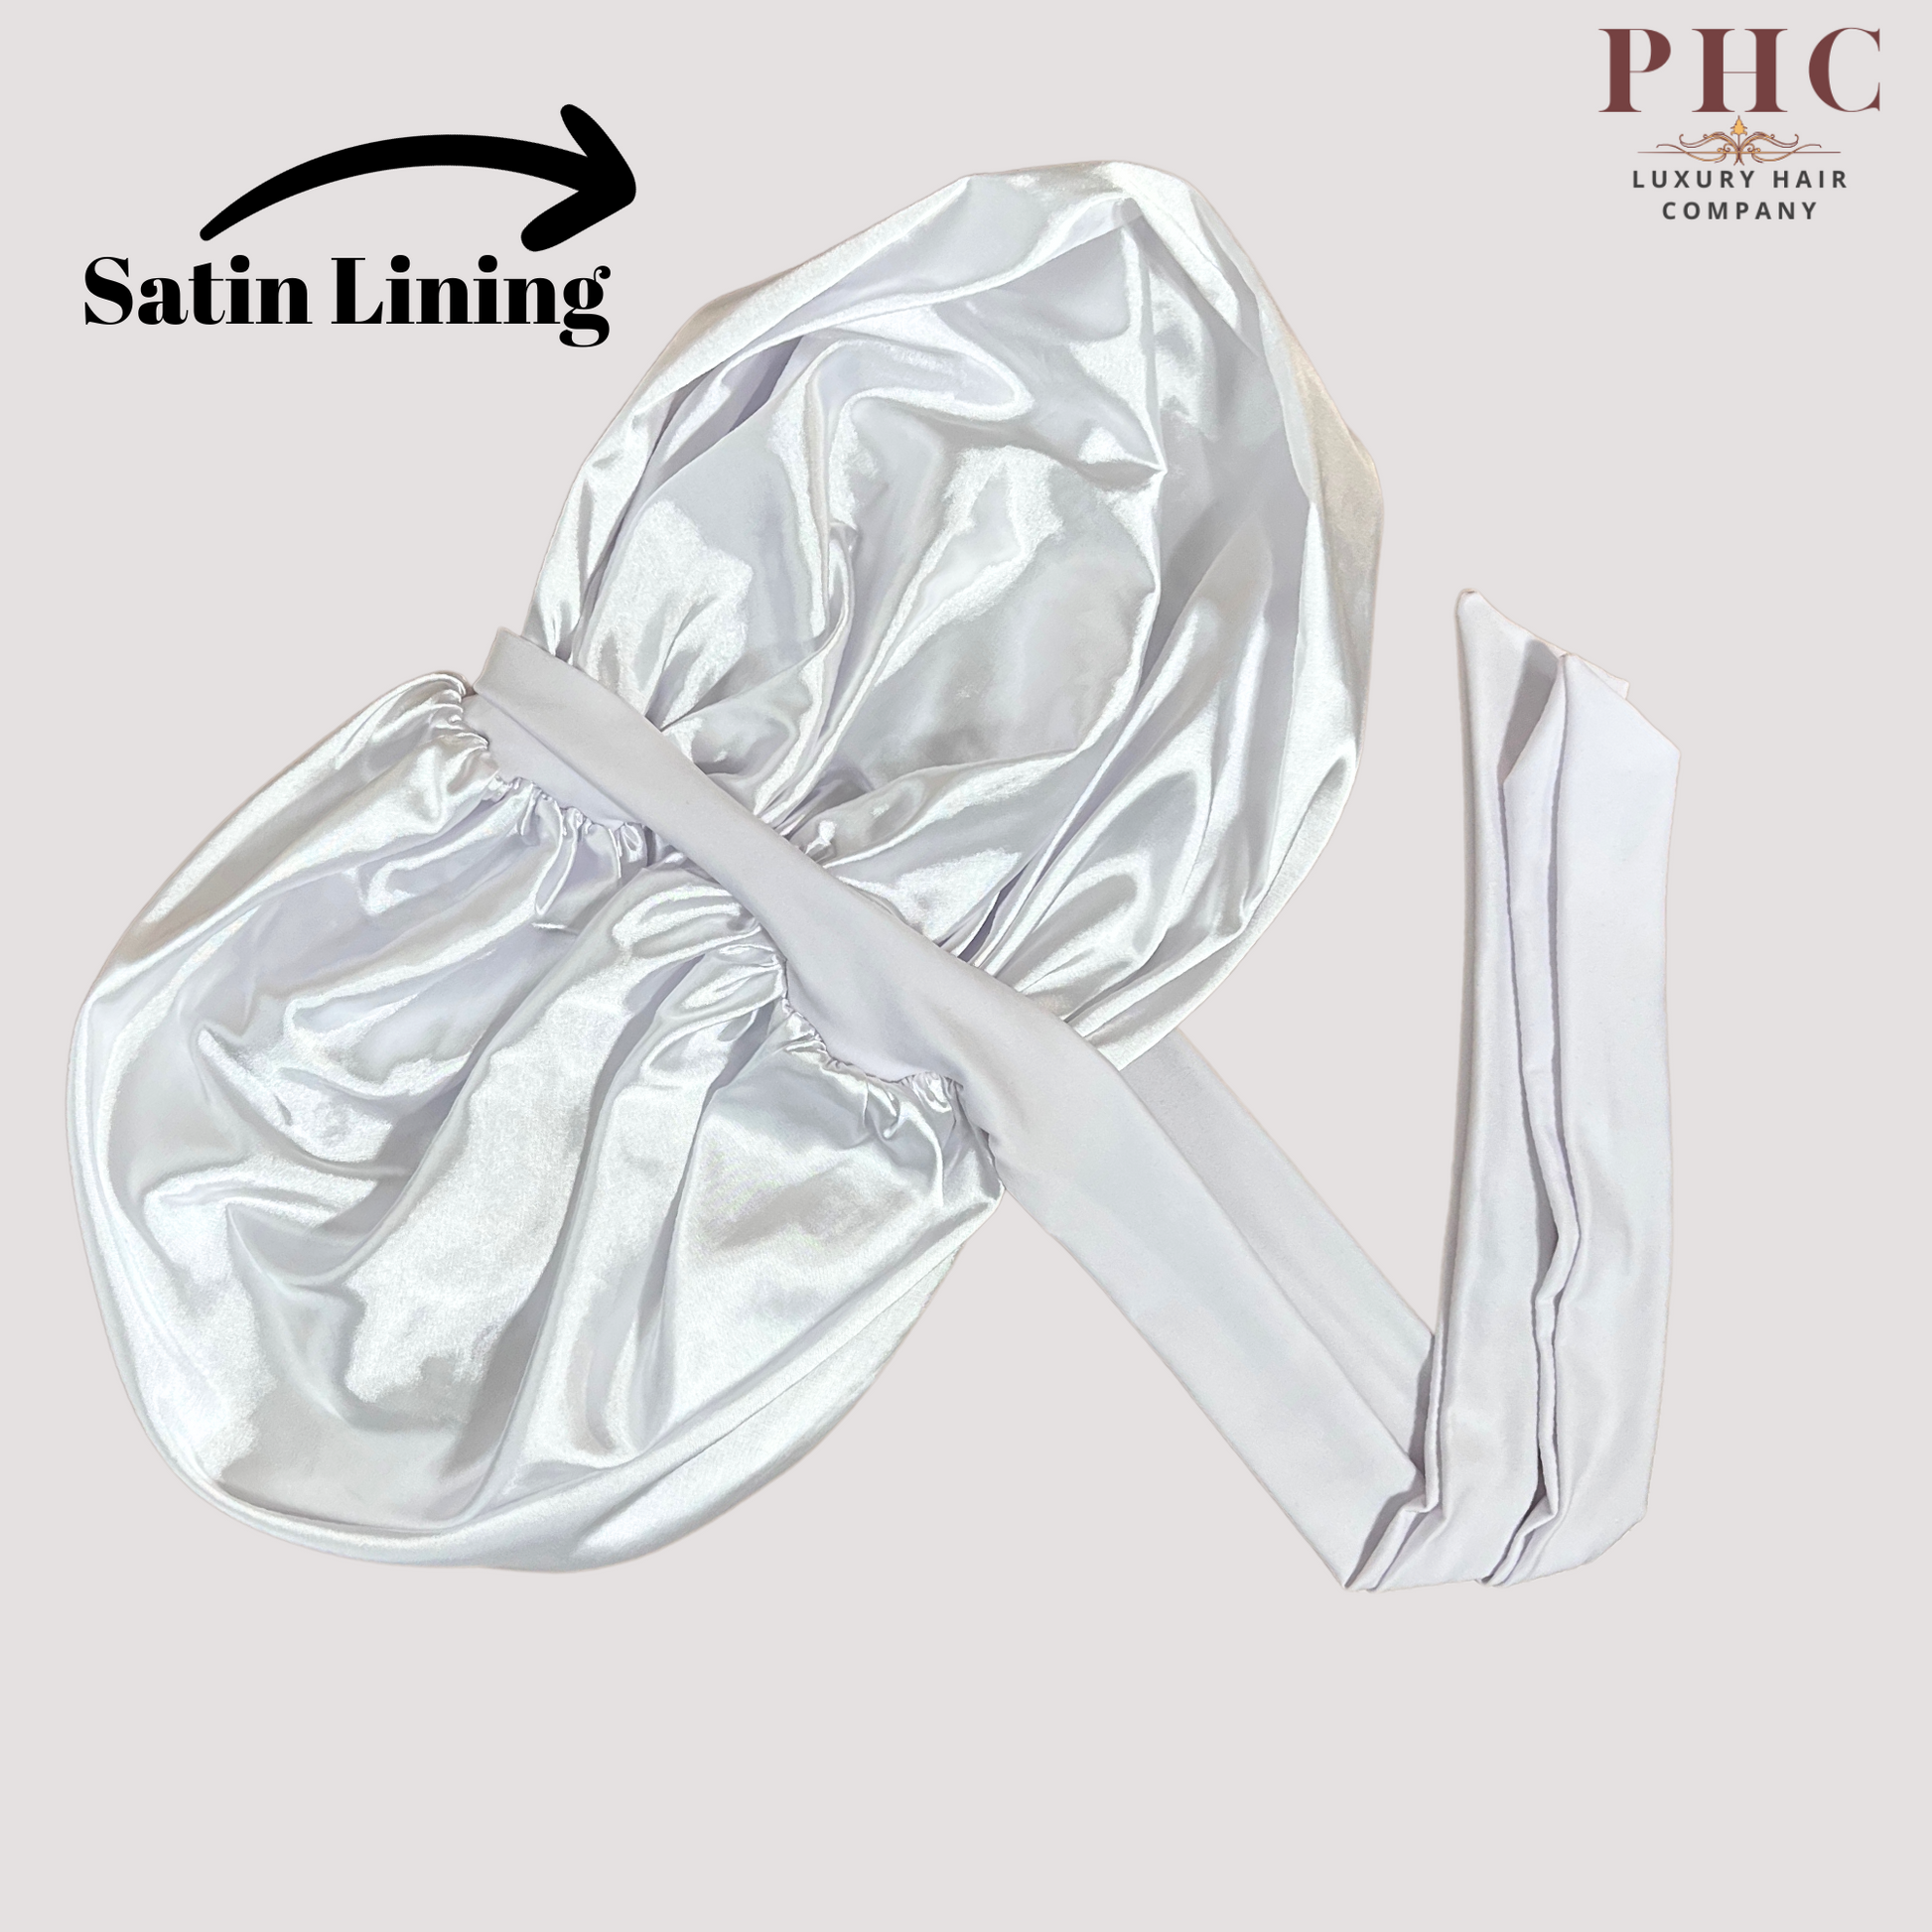 Bespoke Phrygian Bonnet with Natural Silk Satin Lining